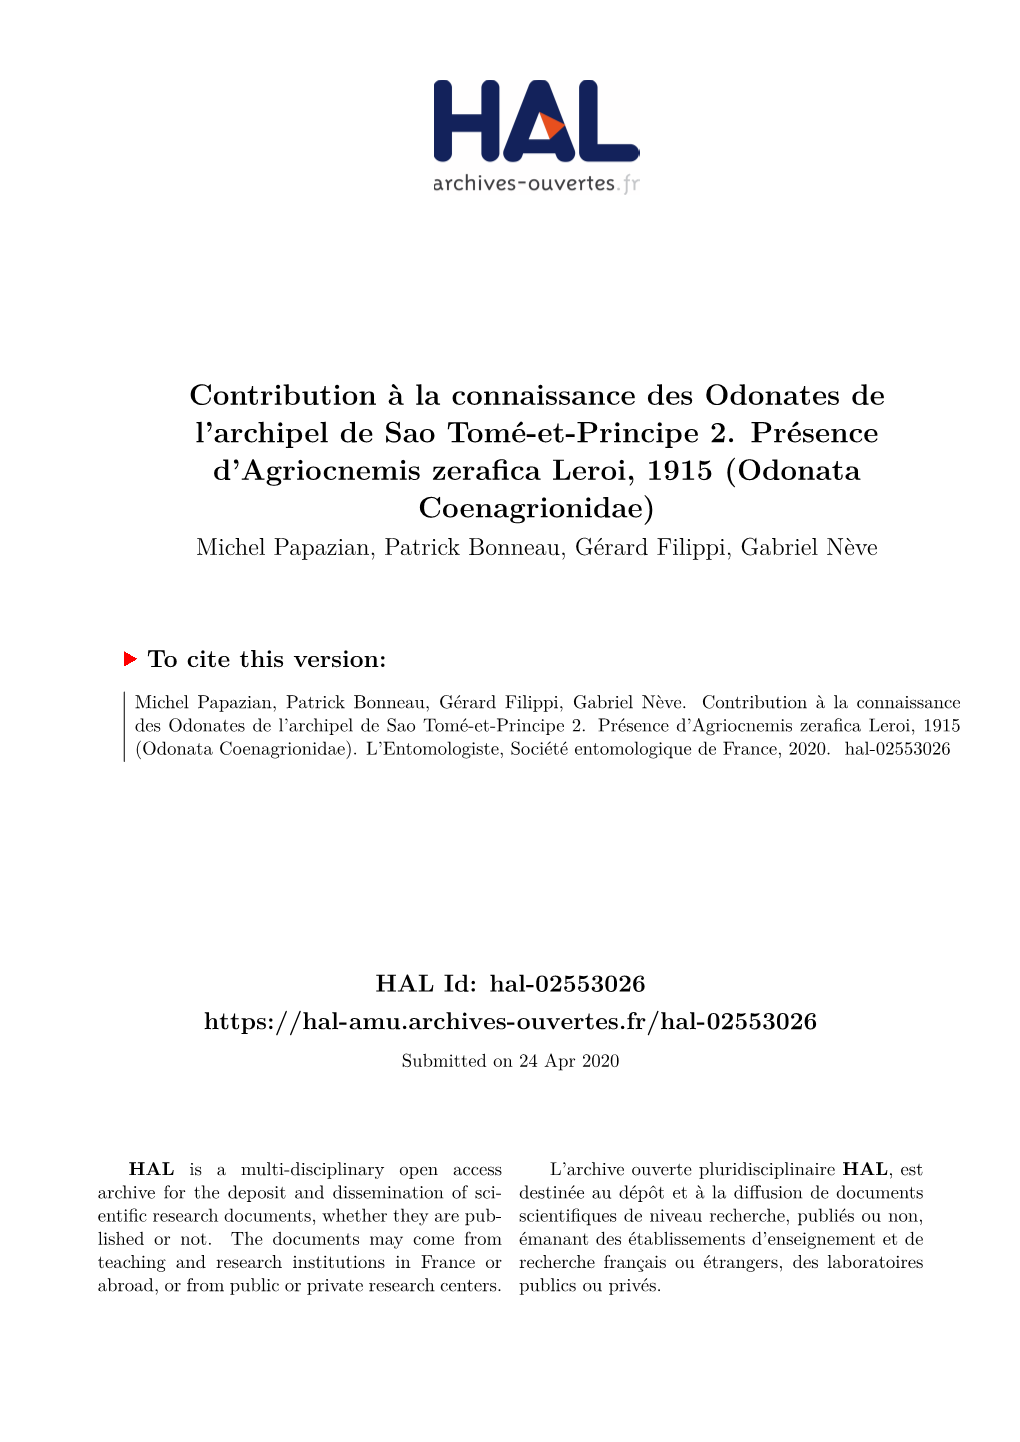 Odonata Coenagrionidae) Michel Papazian, Patrick Bonneau, Gérard Filippi, Gabriel Nève